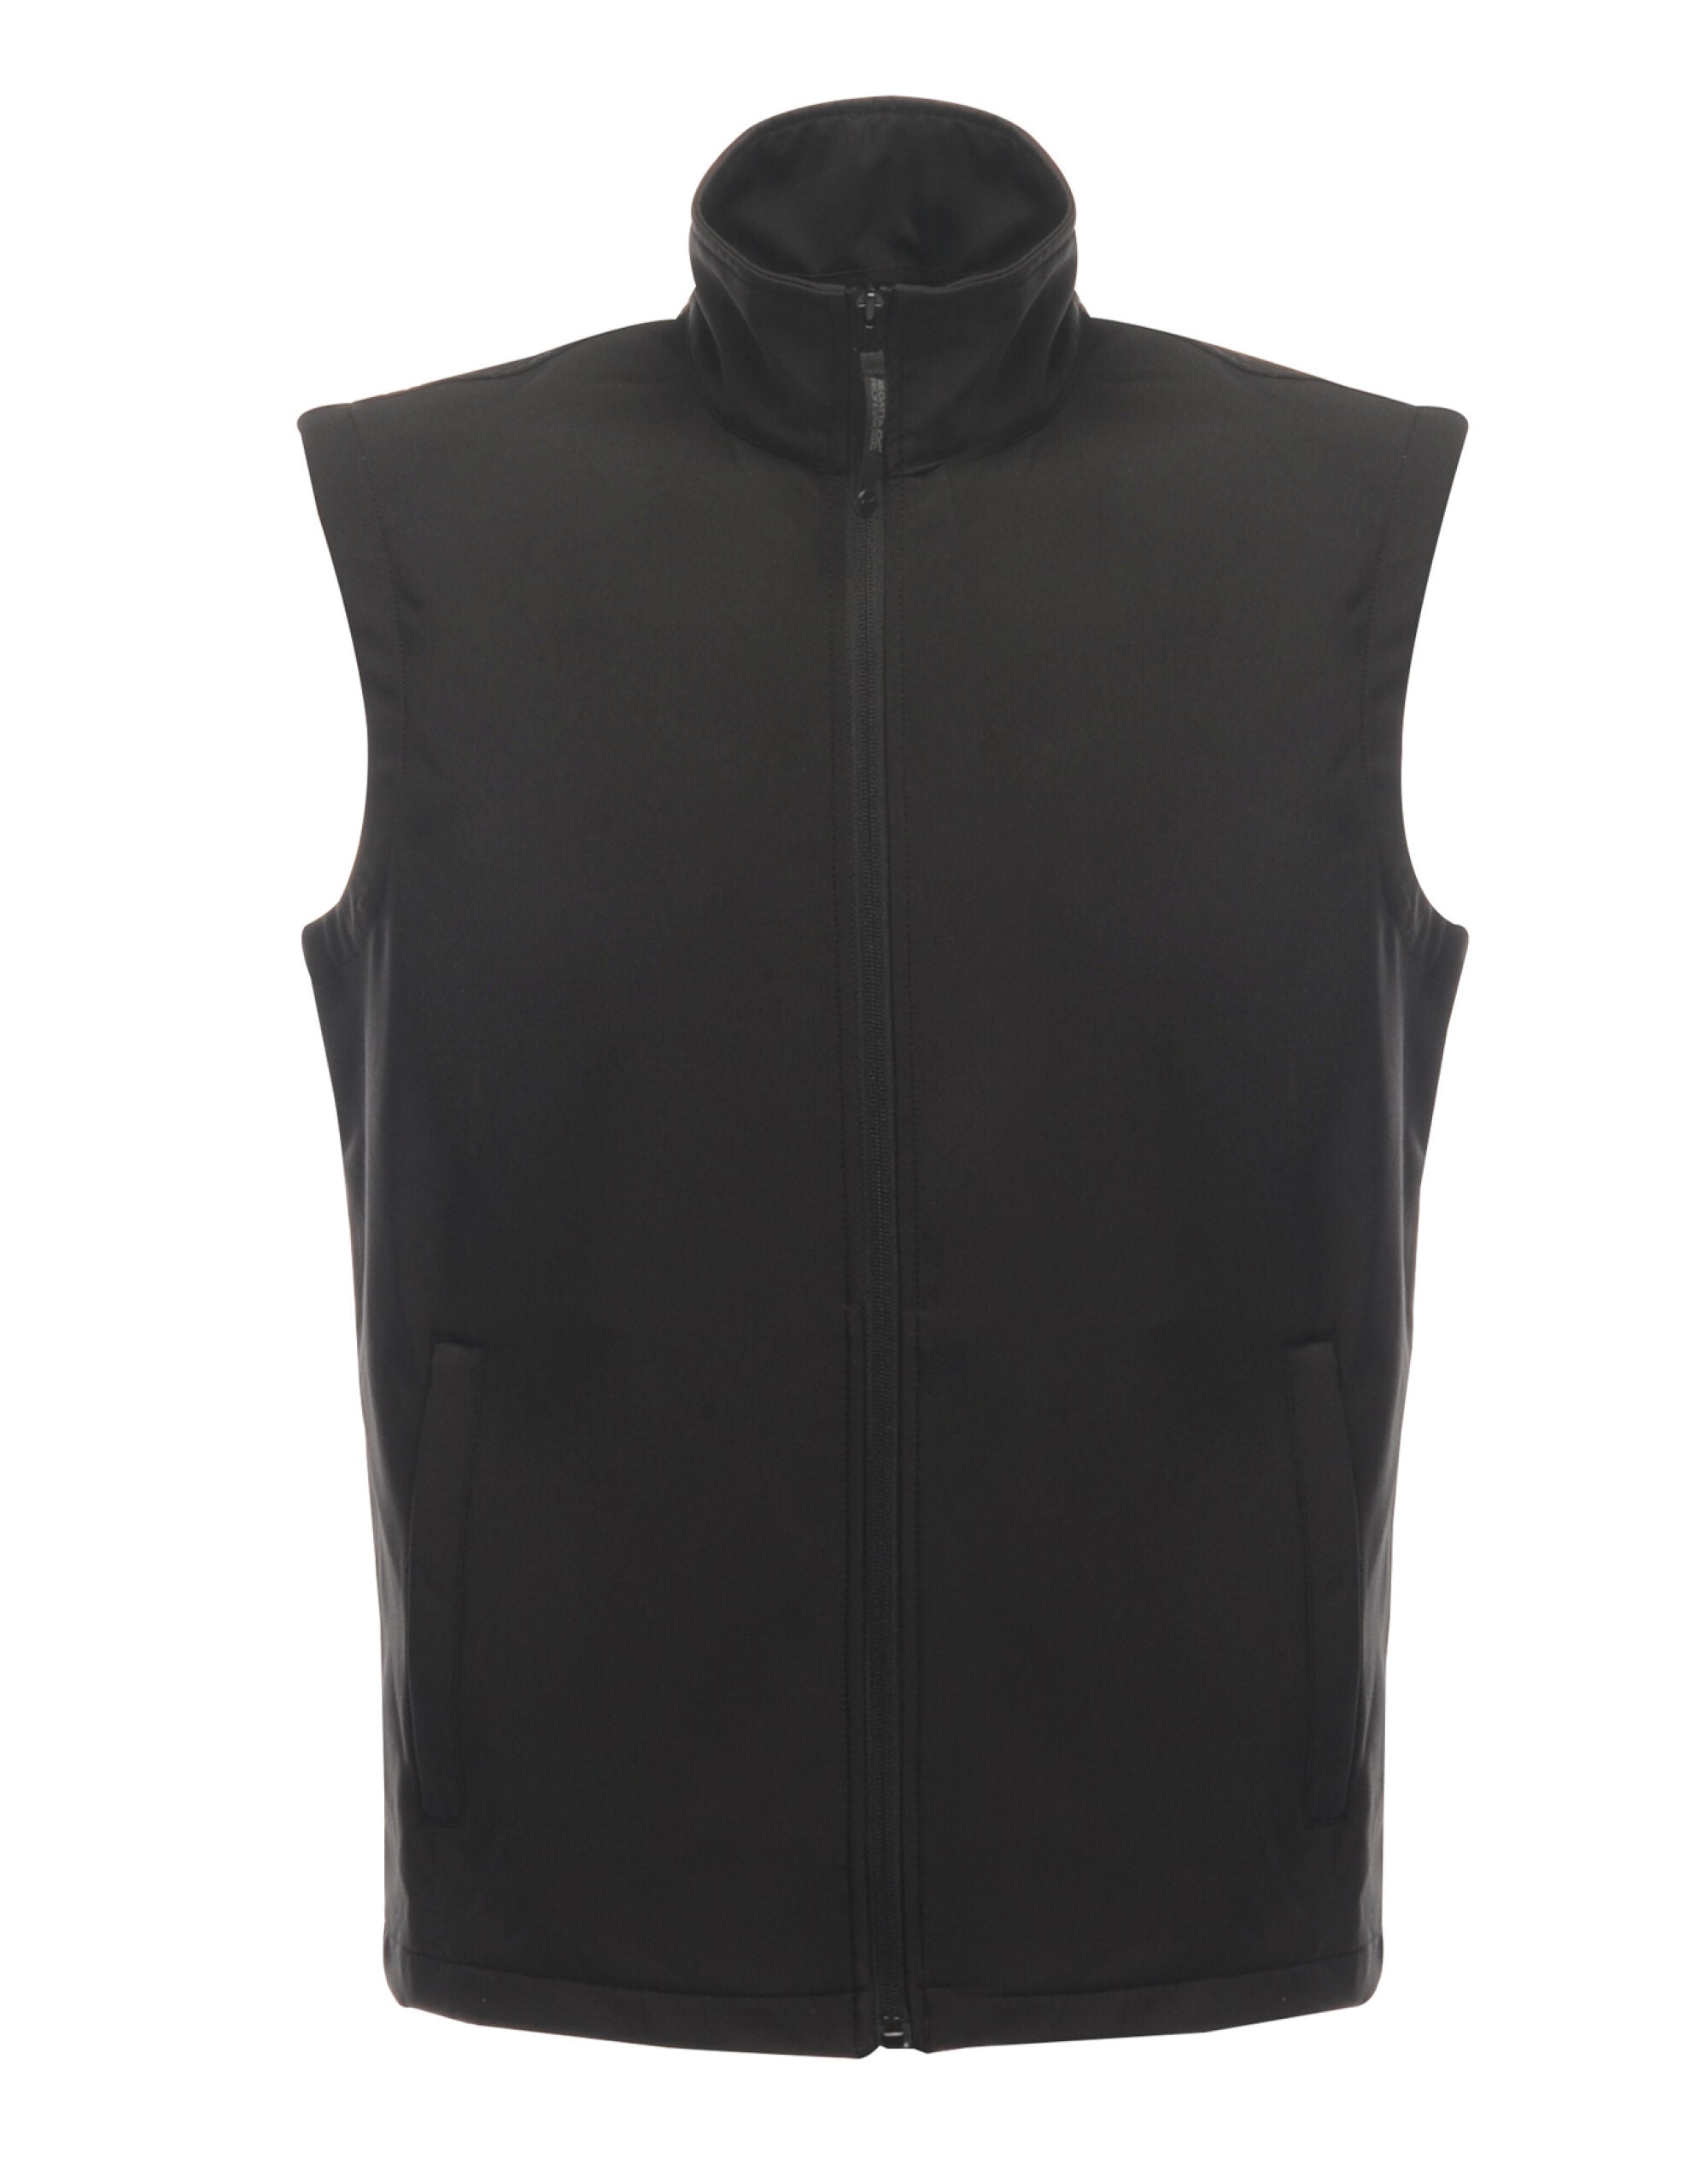 Regatta Professional Classic Printable Softshell Bodywarmer Lightweight jersey backed fabric (TRA820)